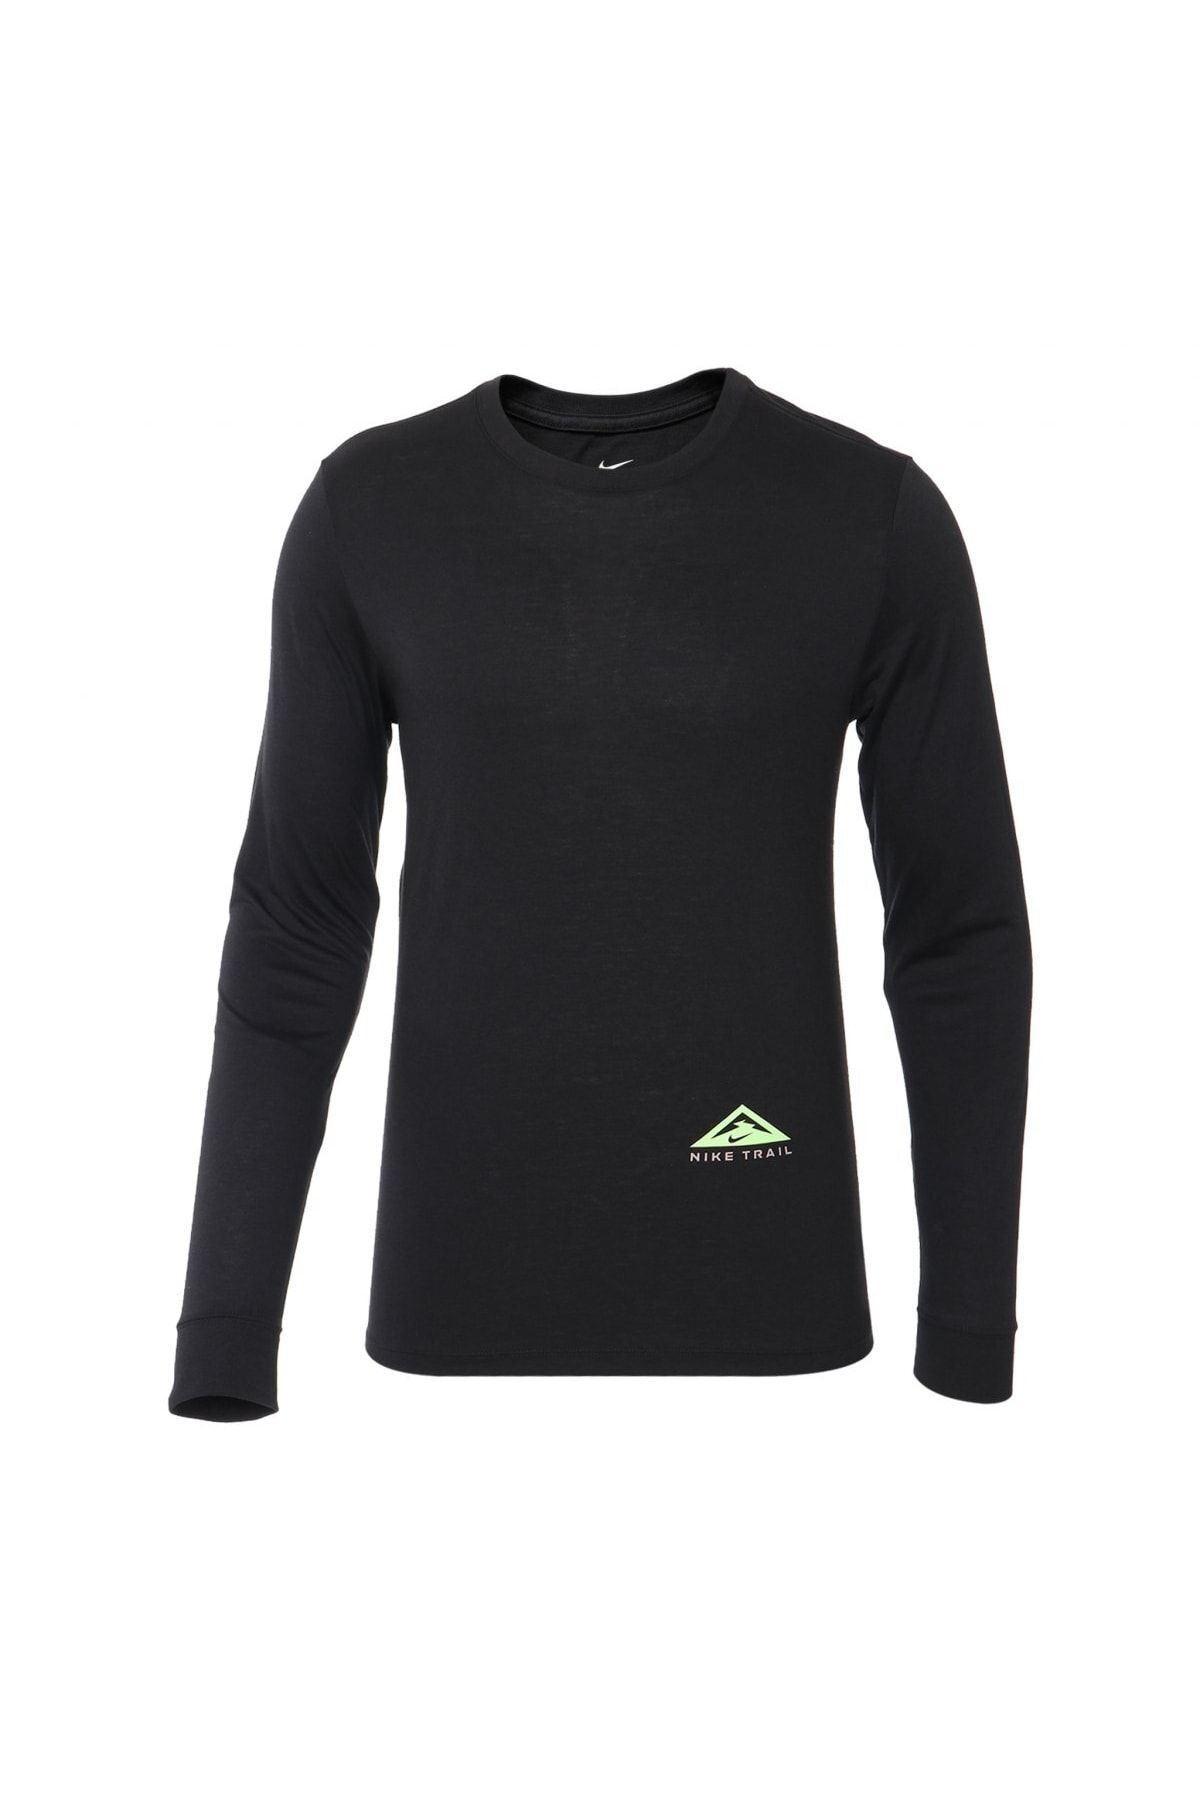 Nike Dri-fıt Men's Long-sleeve Trail Running T-shirt. Sı